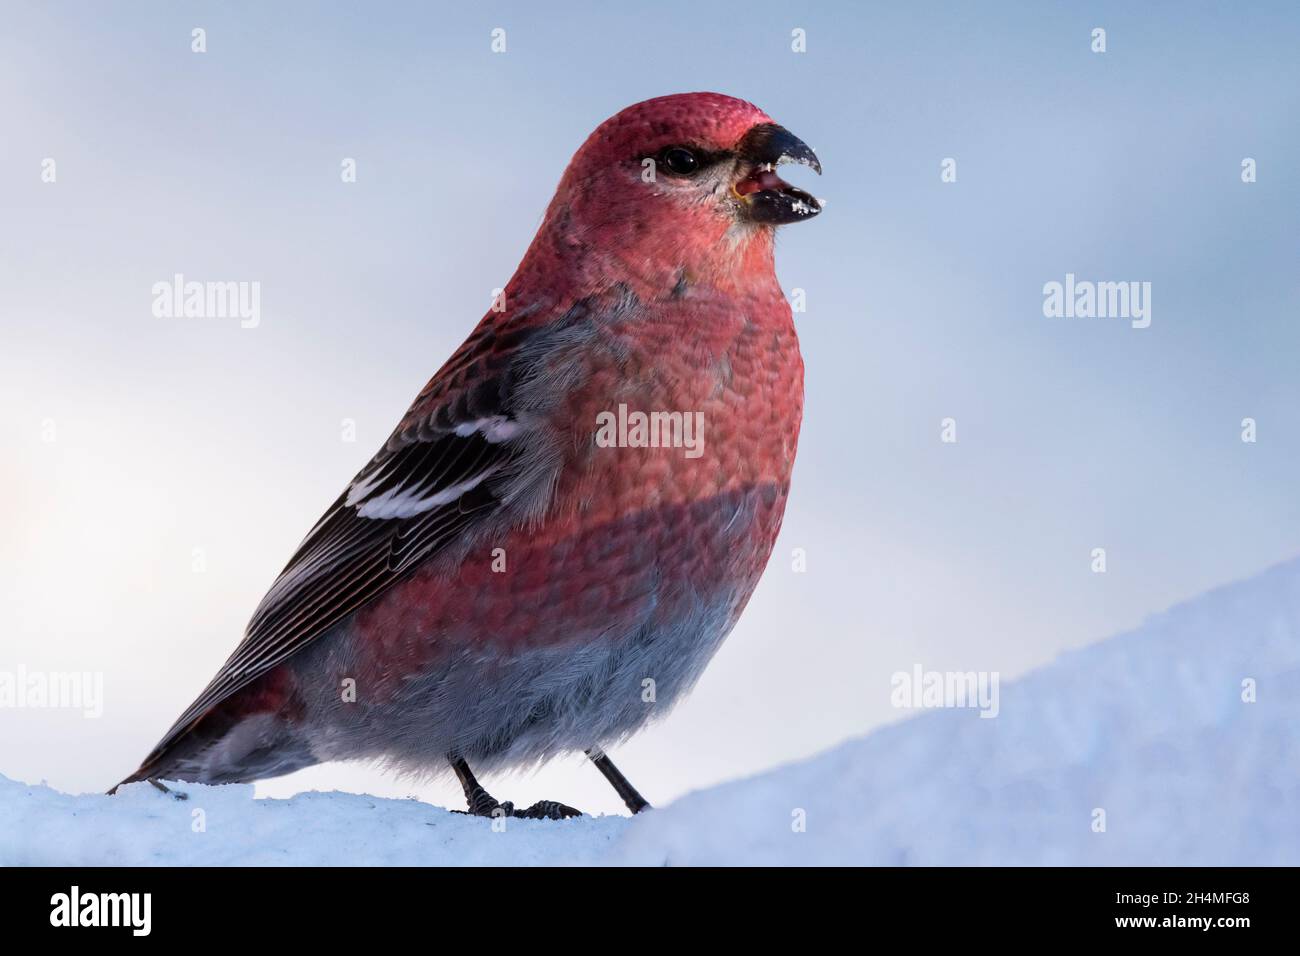 North America; United States; Alaska; Denali National Park;  Winter; Wildlife; Birds; Pink Grosbeak; Pinicola enucleator Stock Photo